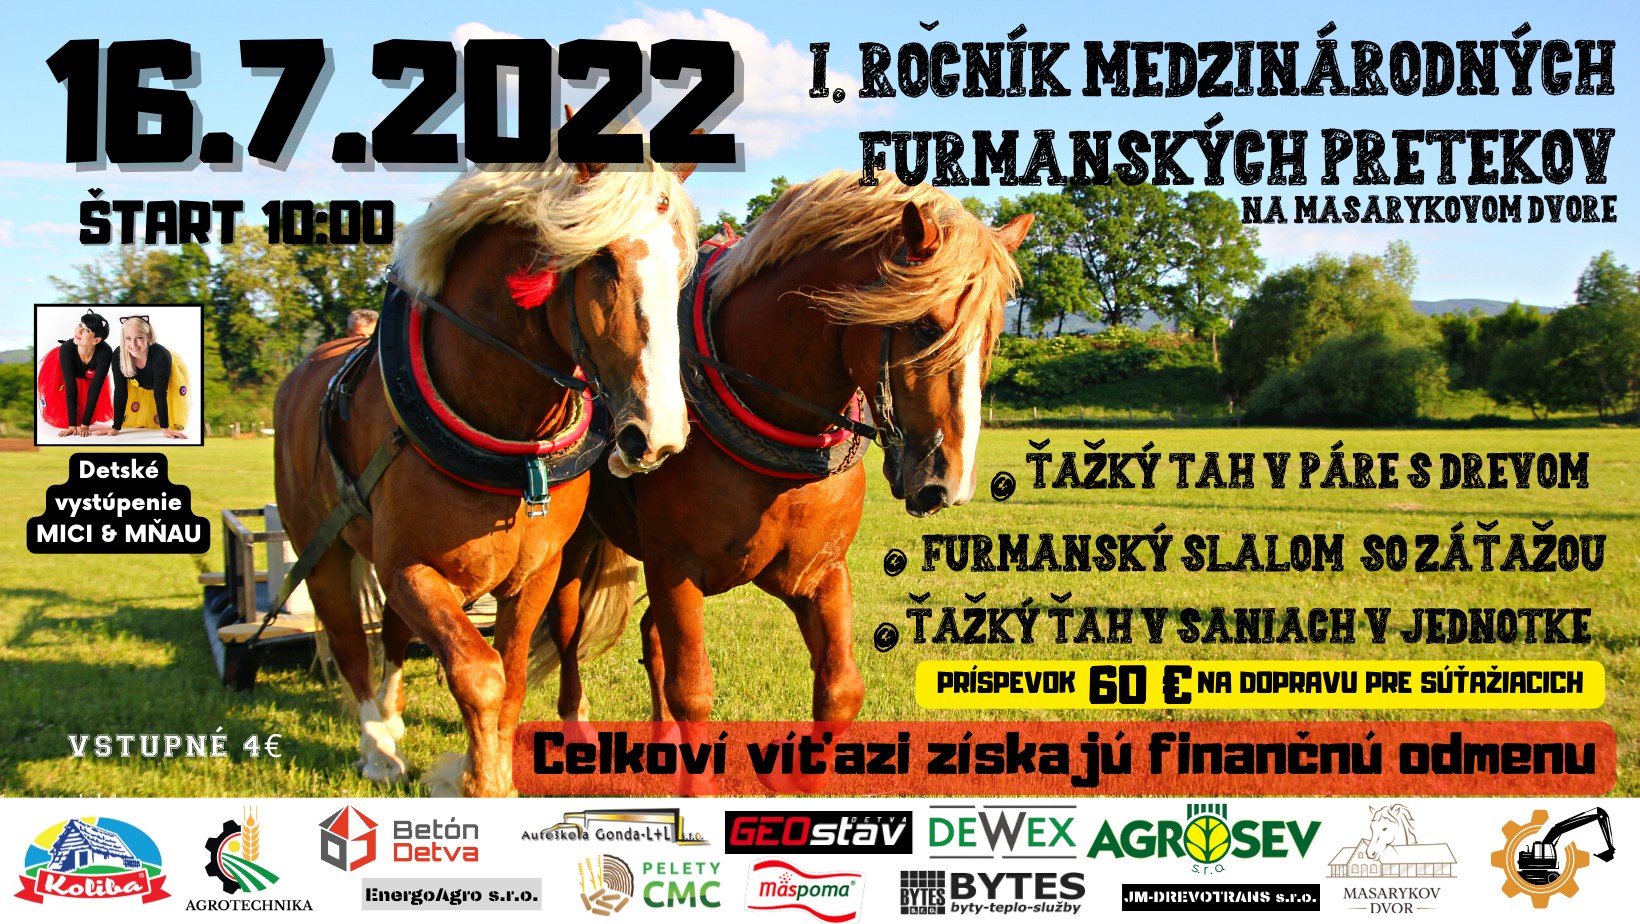 Medzinrodn furmansk preteky 2022 Pstrua - 1. ronk